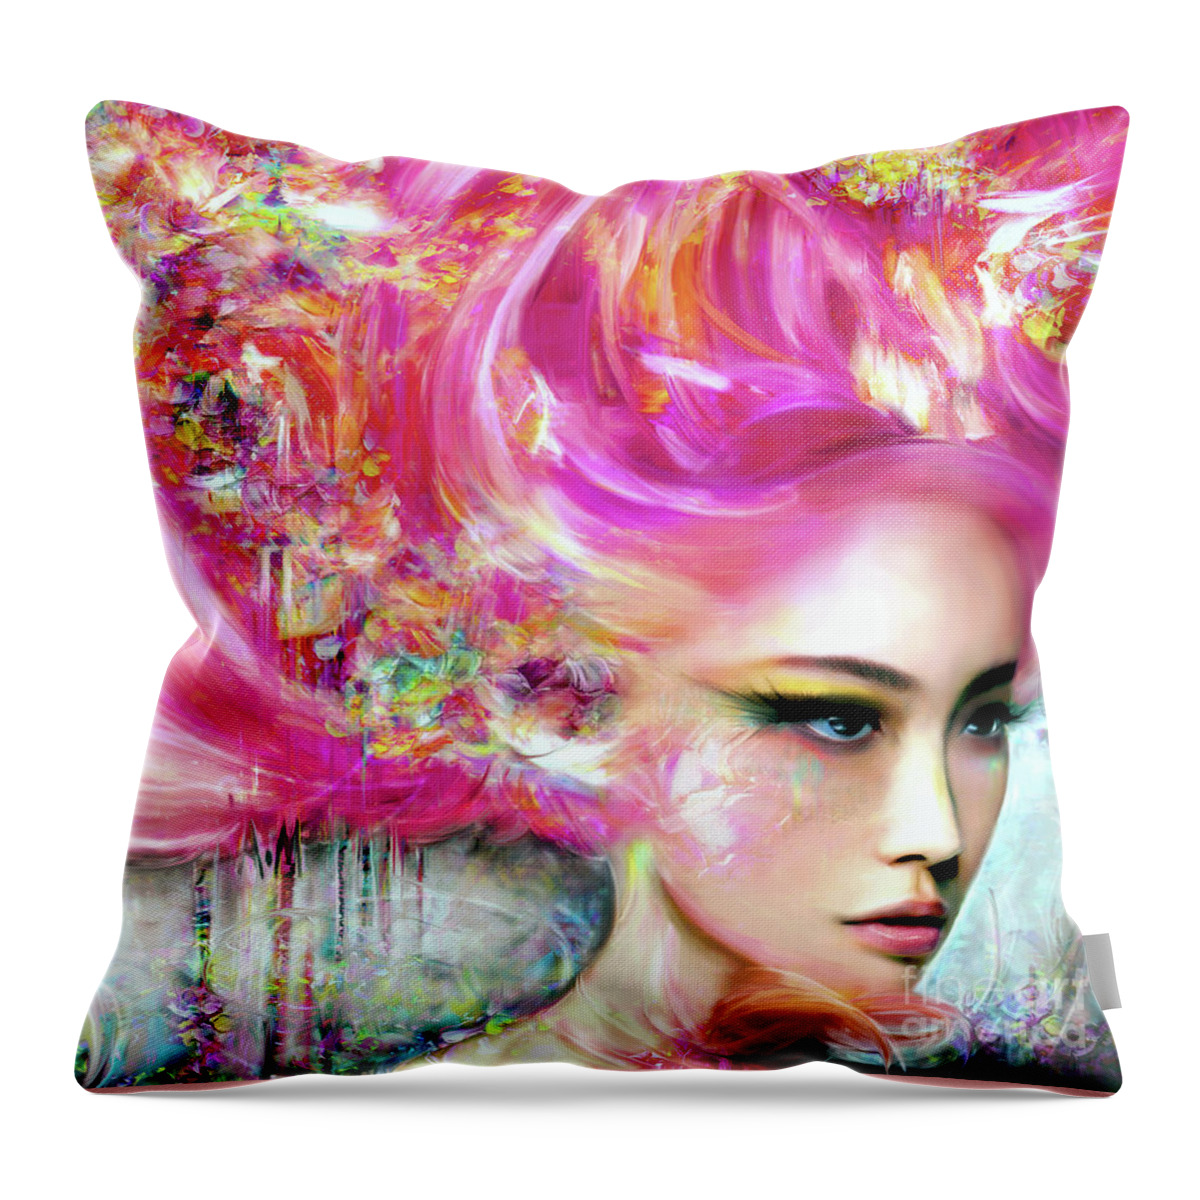 Portrait Throw Pillow featuring the digital art Dreams by Jaimy Mokos